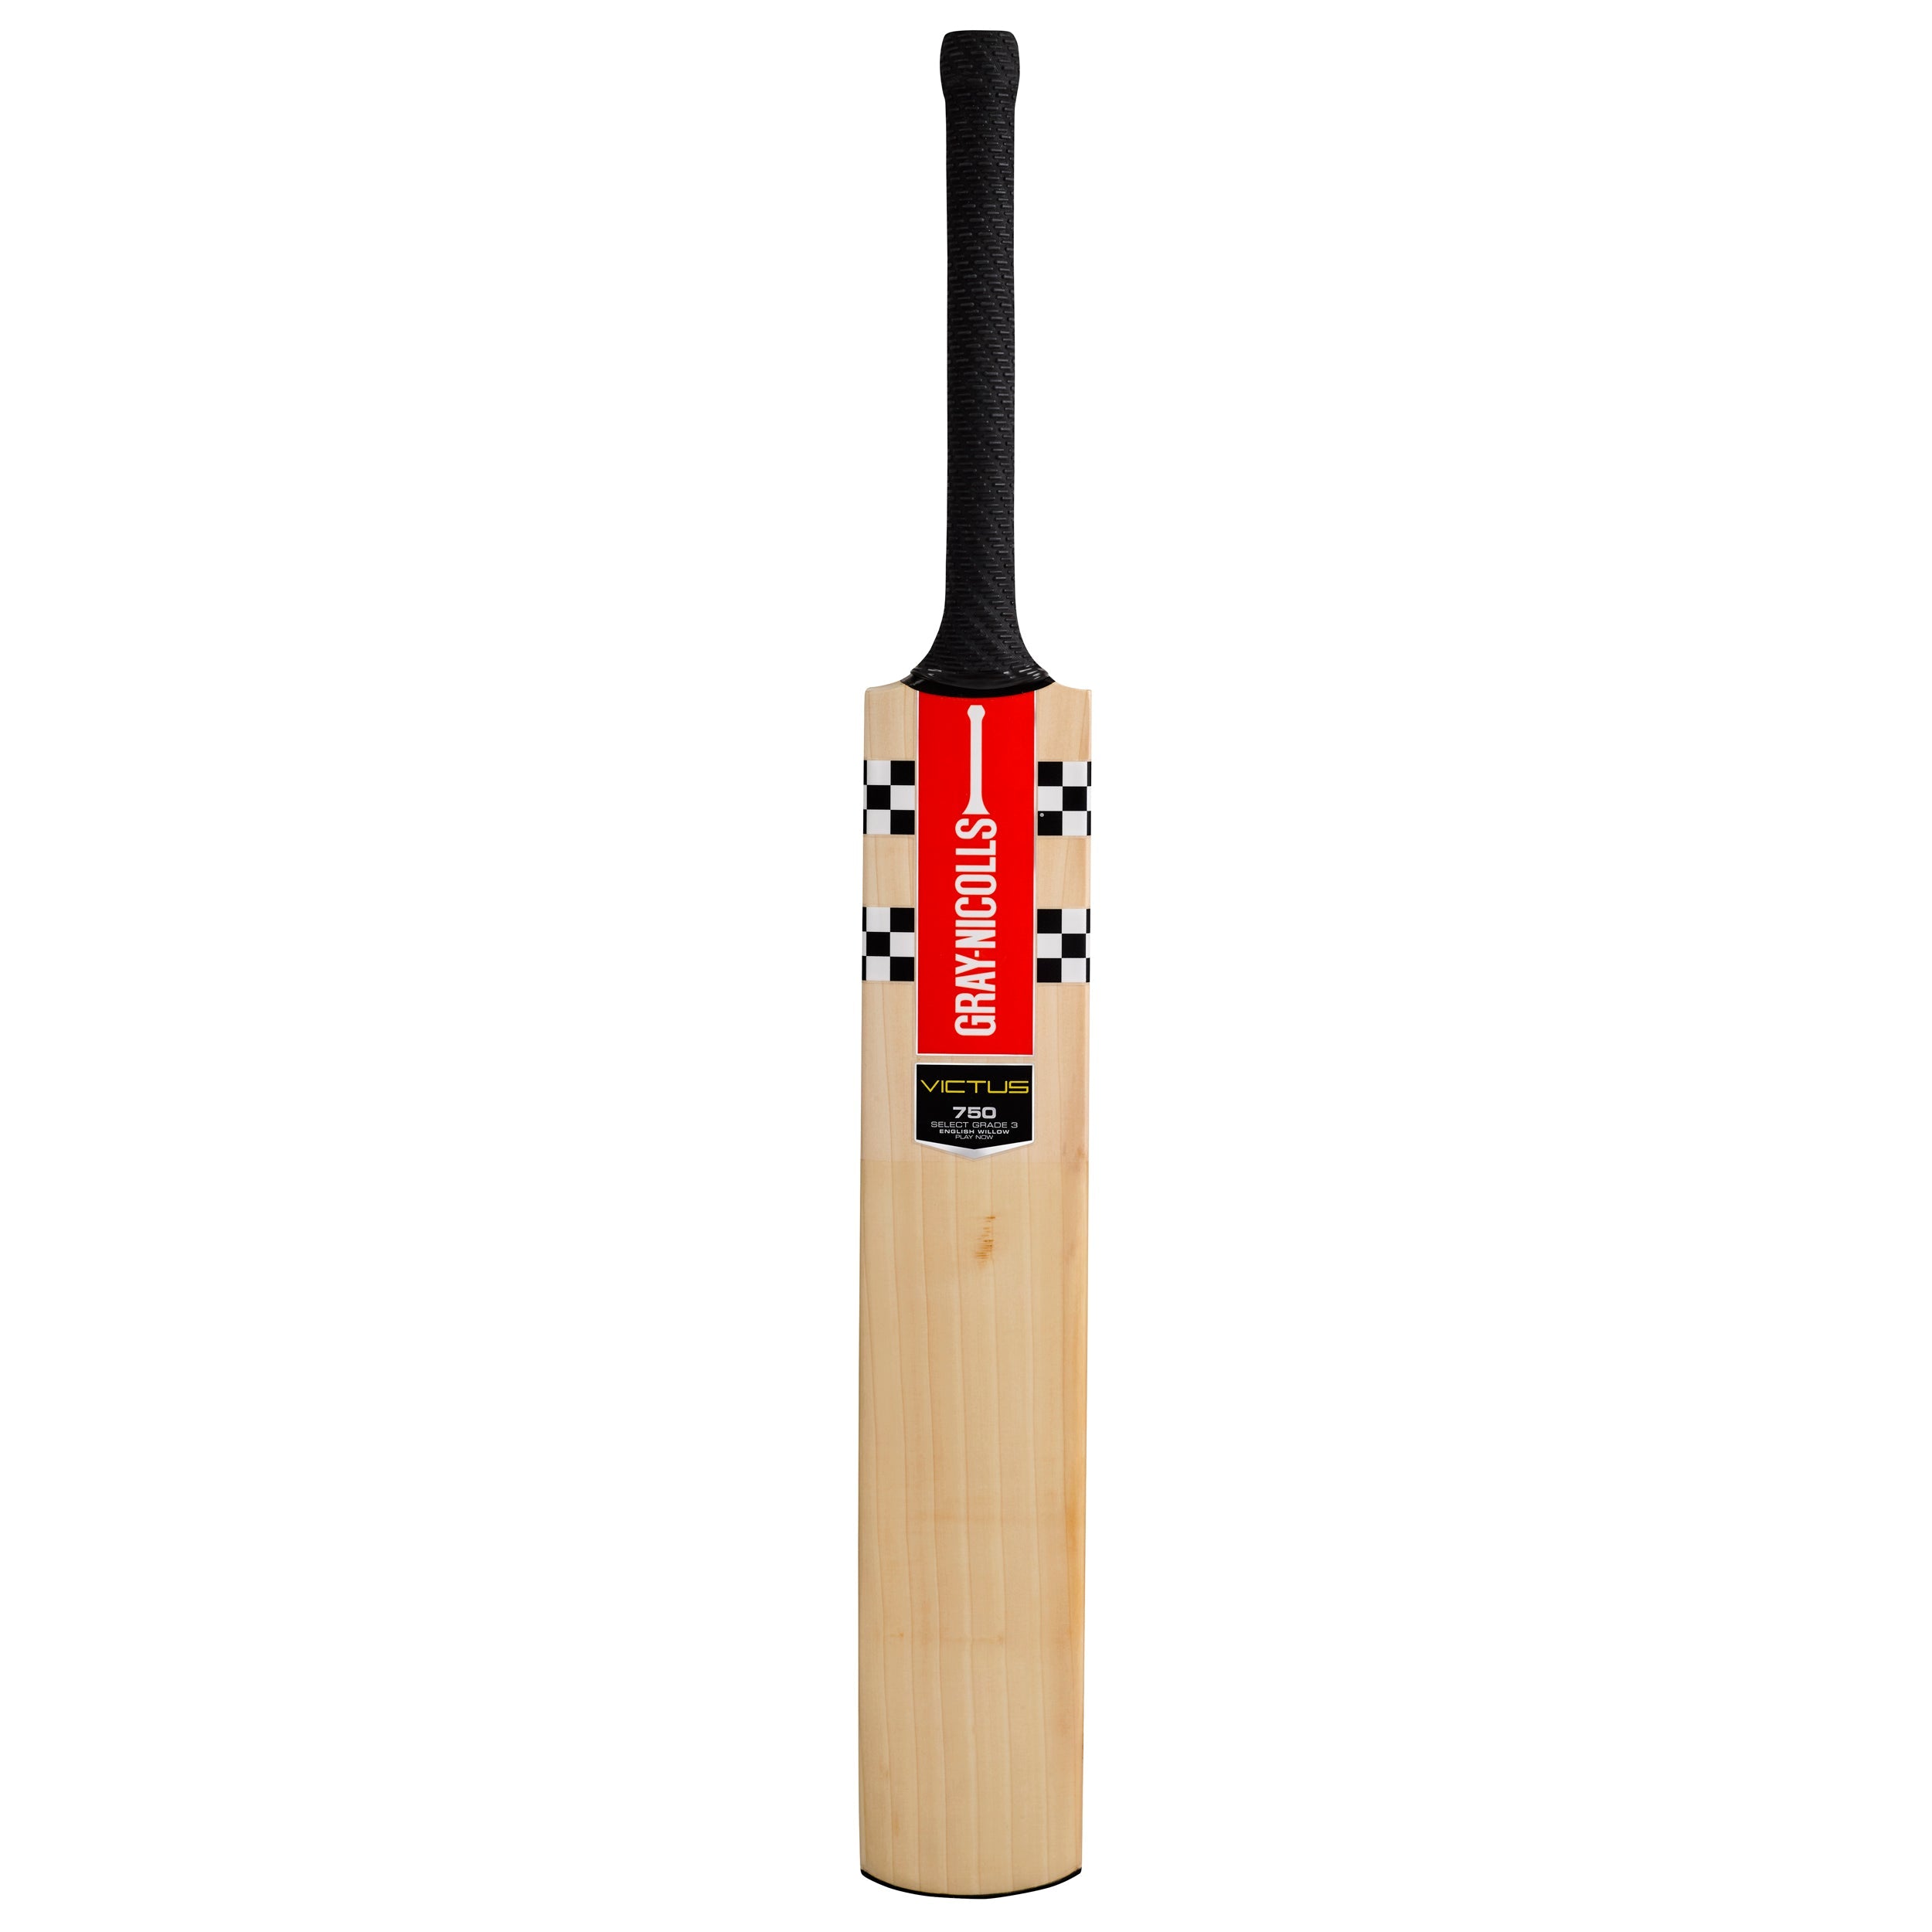 Gray - Nicolls Victus 750 PLAYNOW Senior Cricket Bat - The Cricket Warehouse